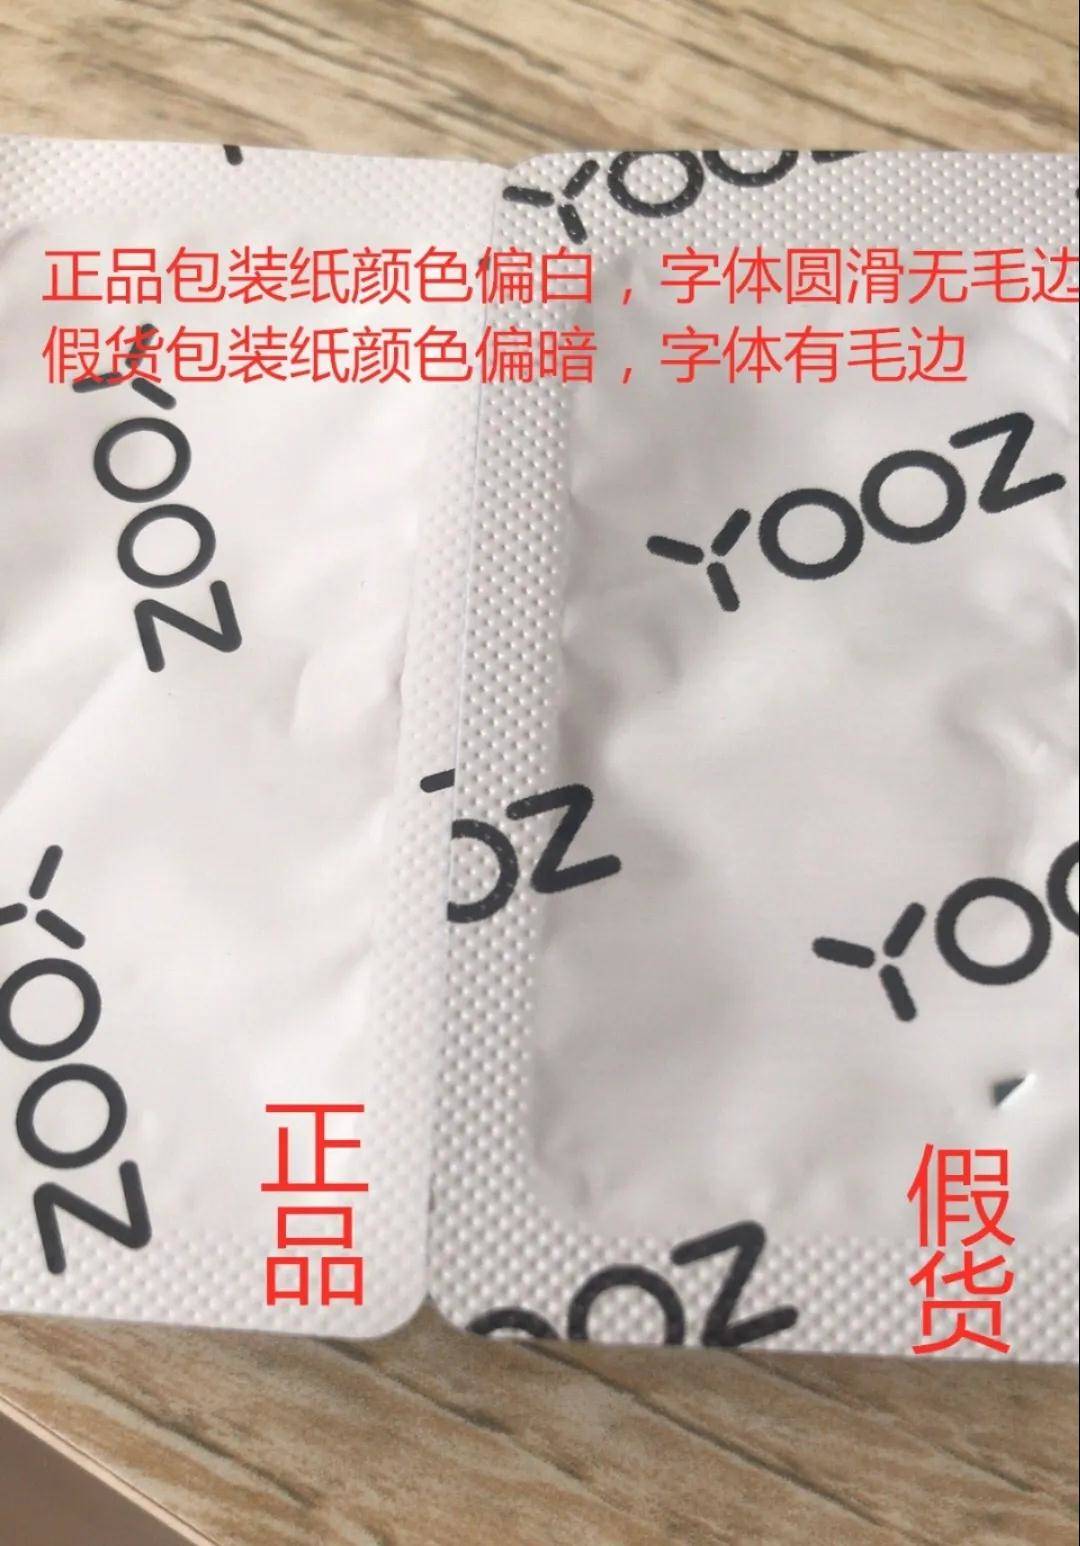 yooz柚子电子烟真假对比图。教你如何辨别高仿货！